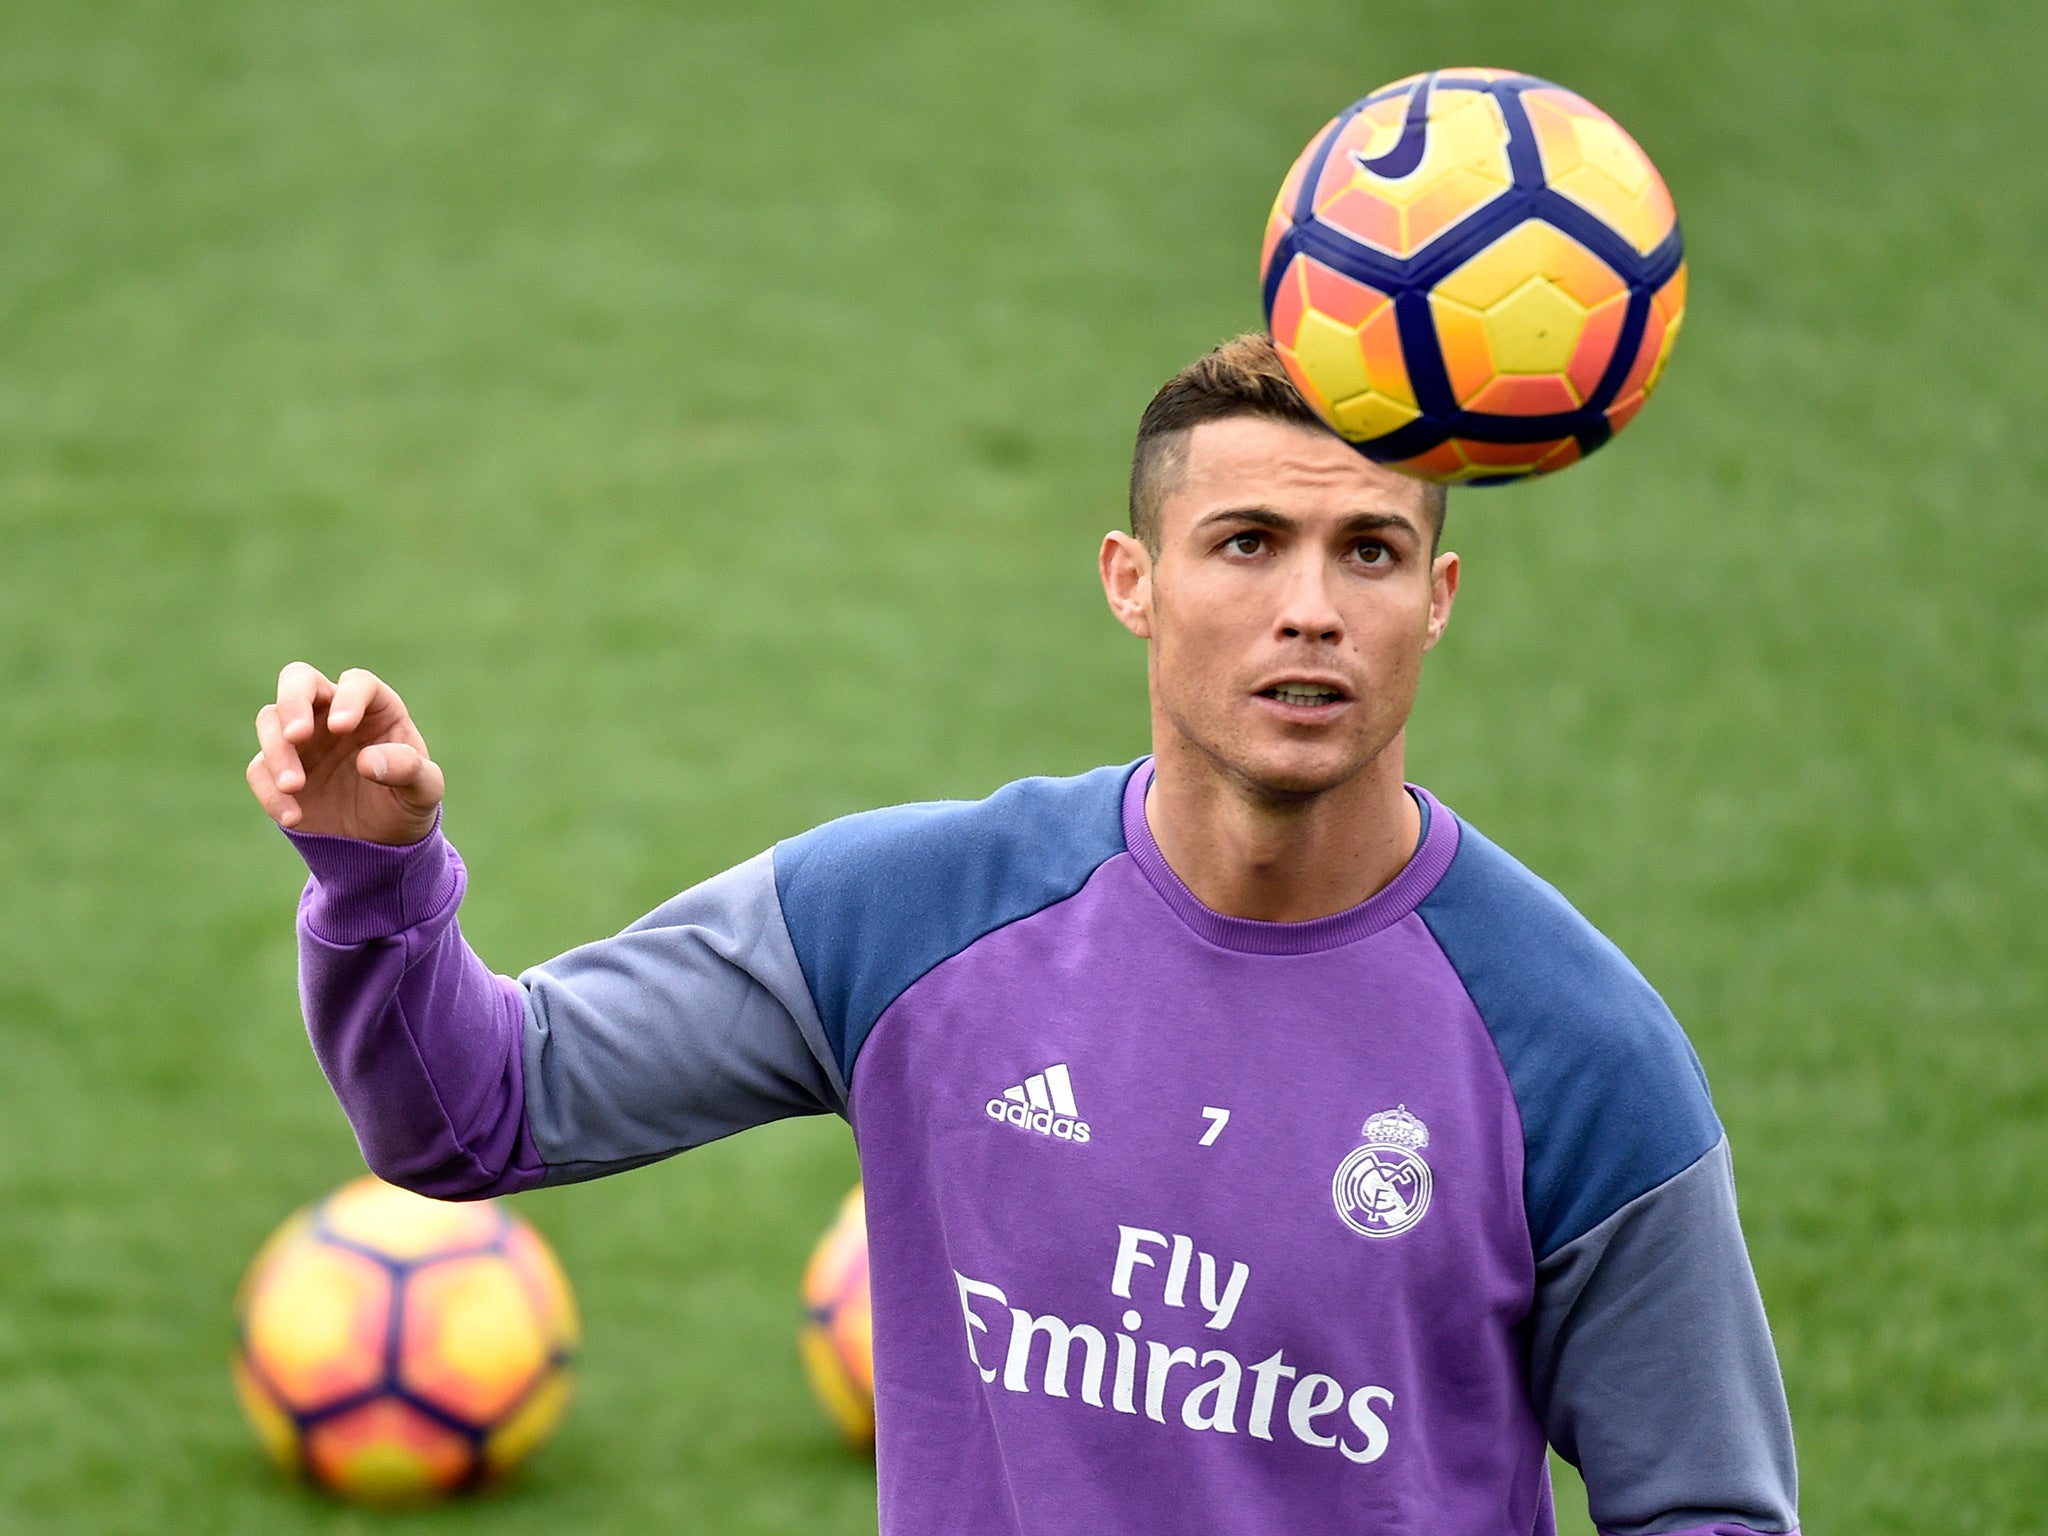 Ronaldo's finances were scrutinised by a group of European newspapers last week